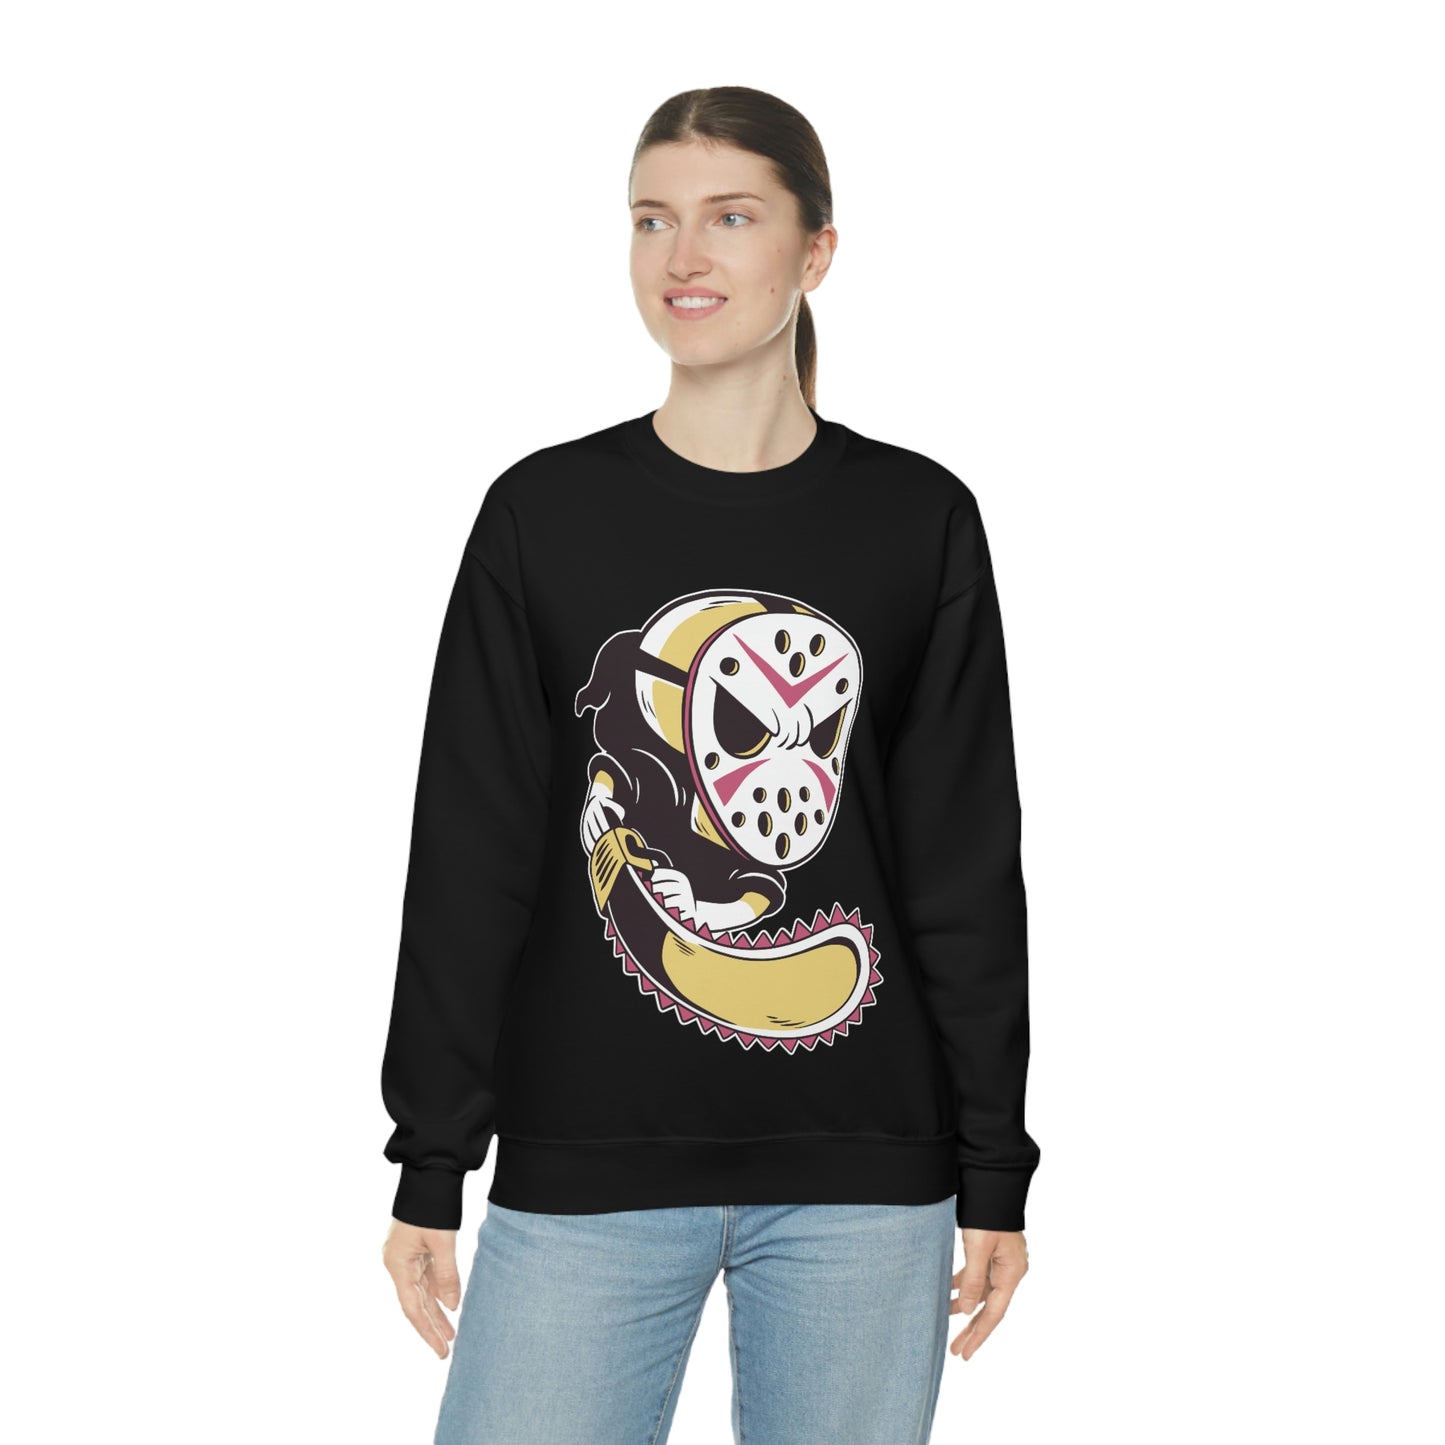 Grim Reaper With Hockey Mask Cartoon Goth Aesthetic Sweatshirt